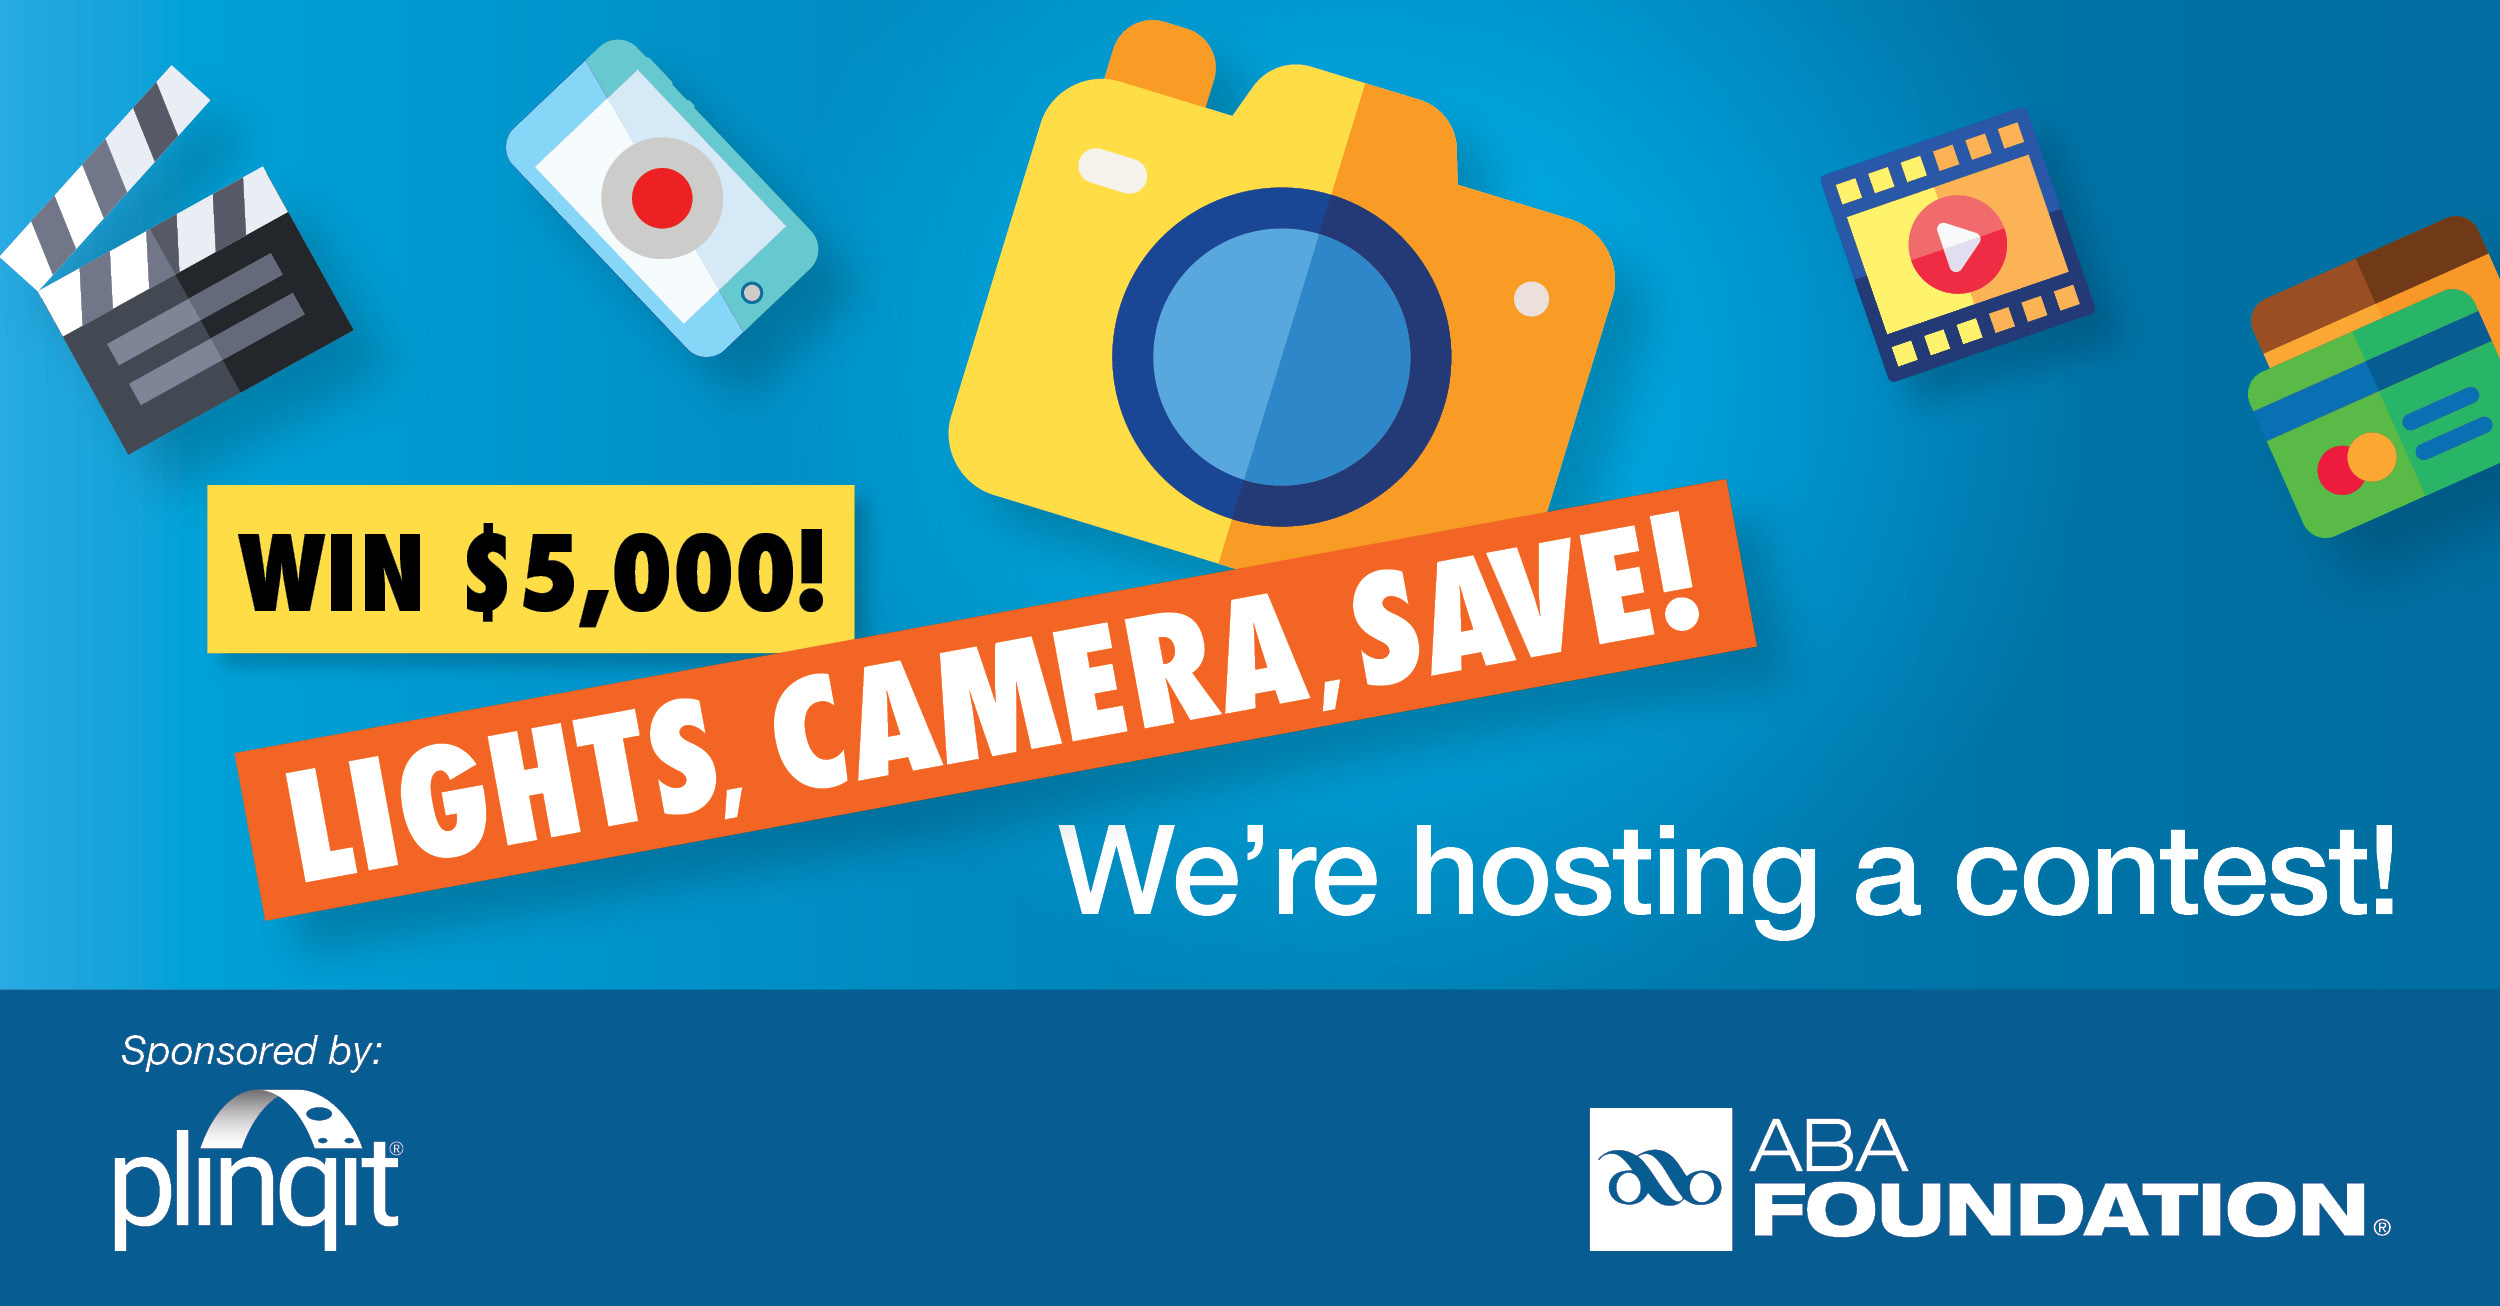 image 2023 Lights, Camera, Save! Contest